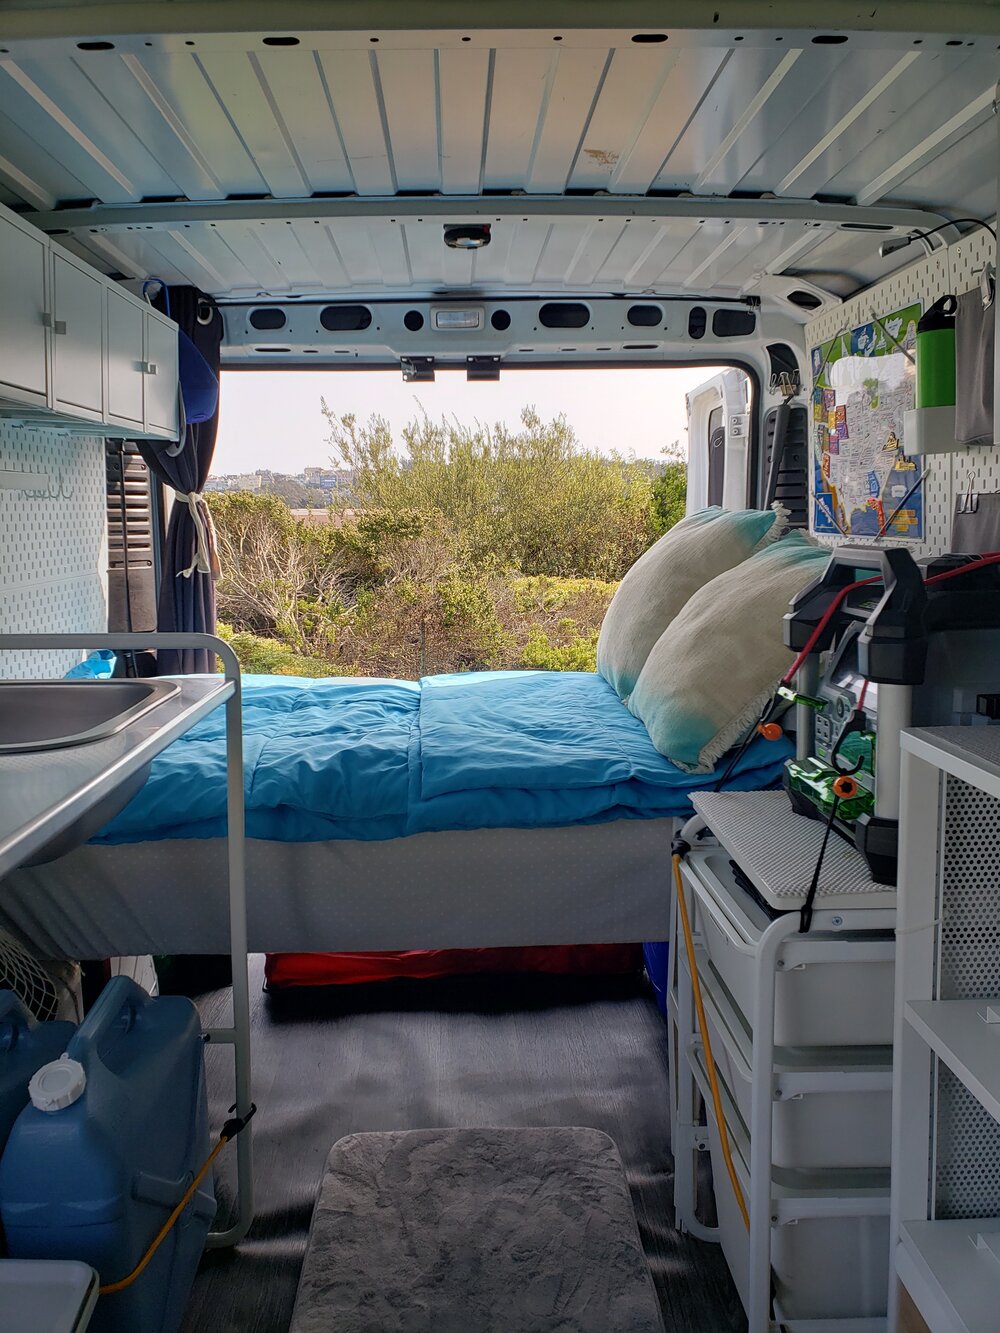 2020 Ikea Camper Van Conversion for $2000 — The